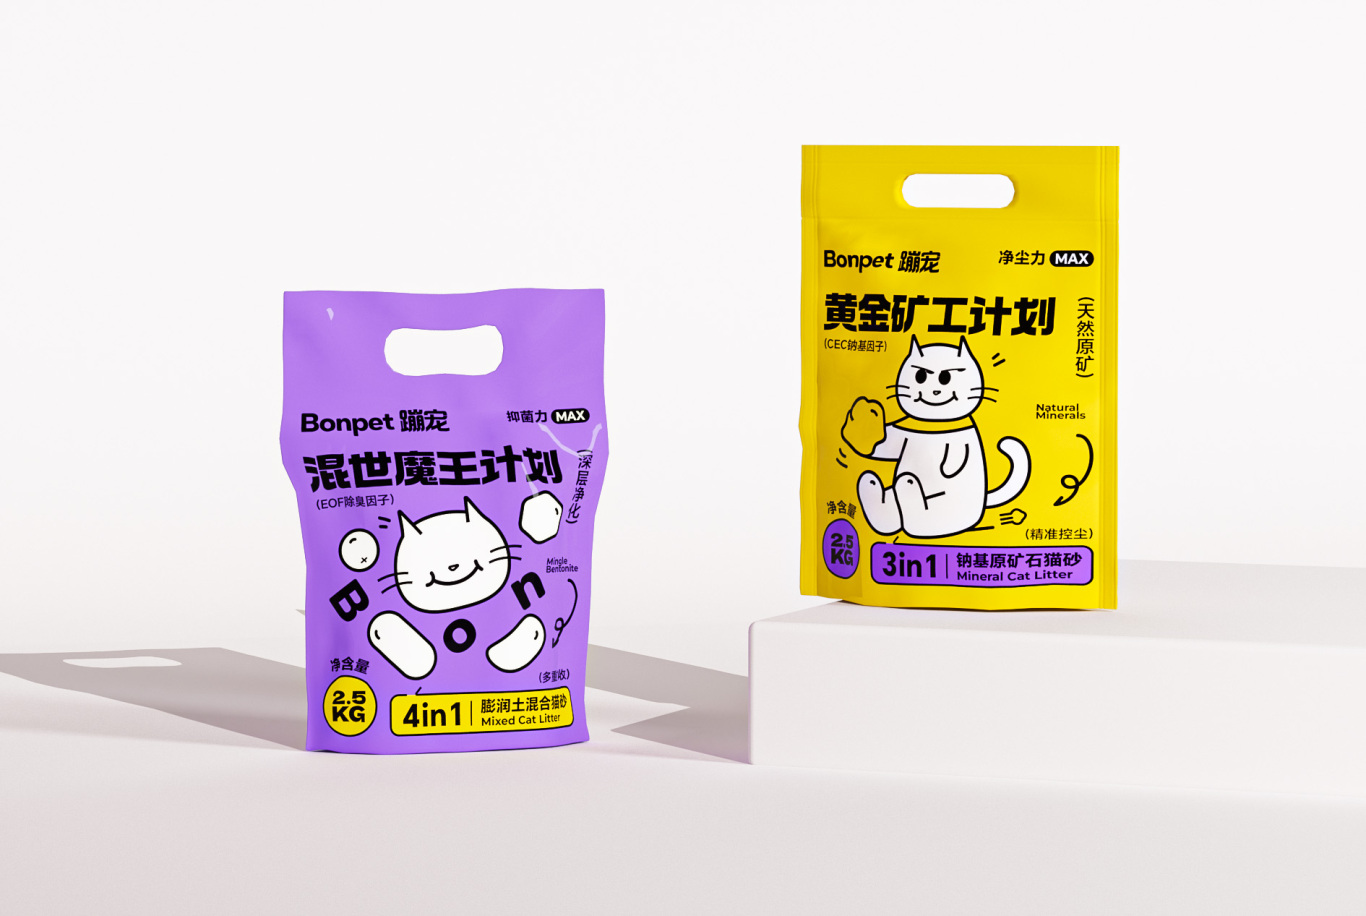 Bonpet X 蹦宠猫砂 C位出道丨趣味猫砂系列包装设计图11